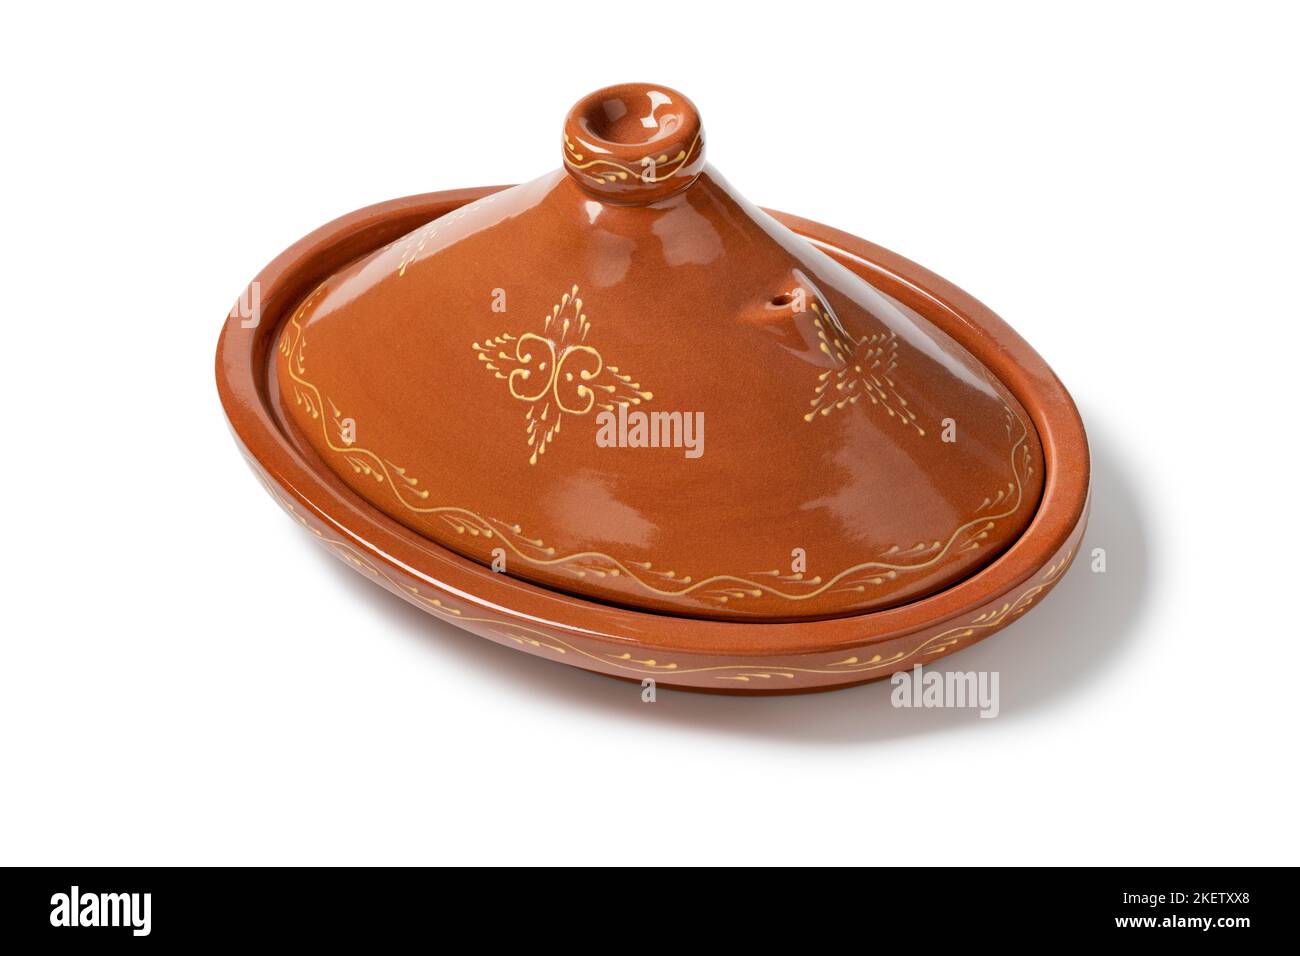 Tajine oval tradicional o tagine, una olla de cerámica del norte de África aislada sobre fondo blanco Foto de stock